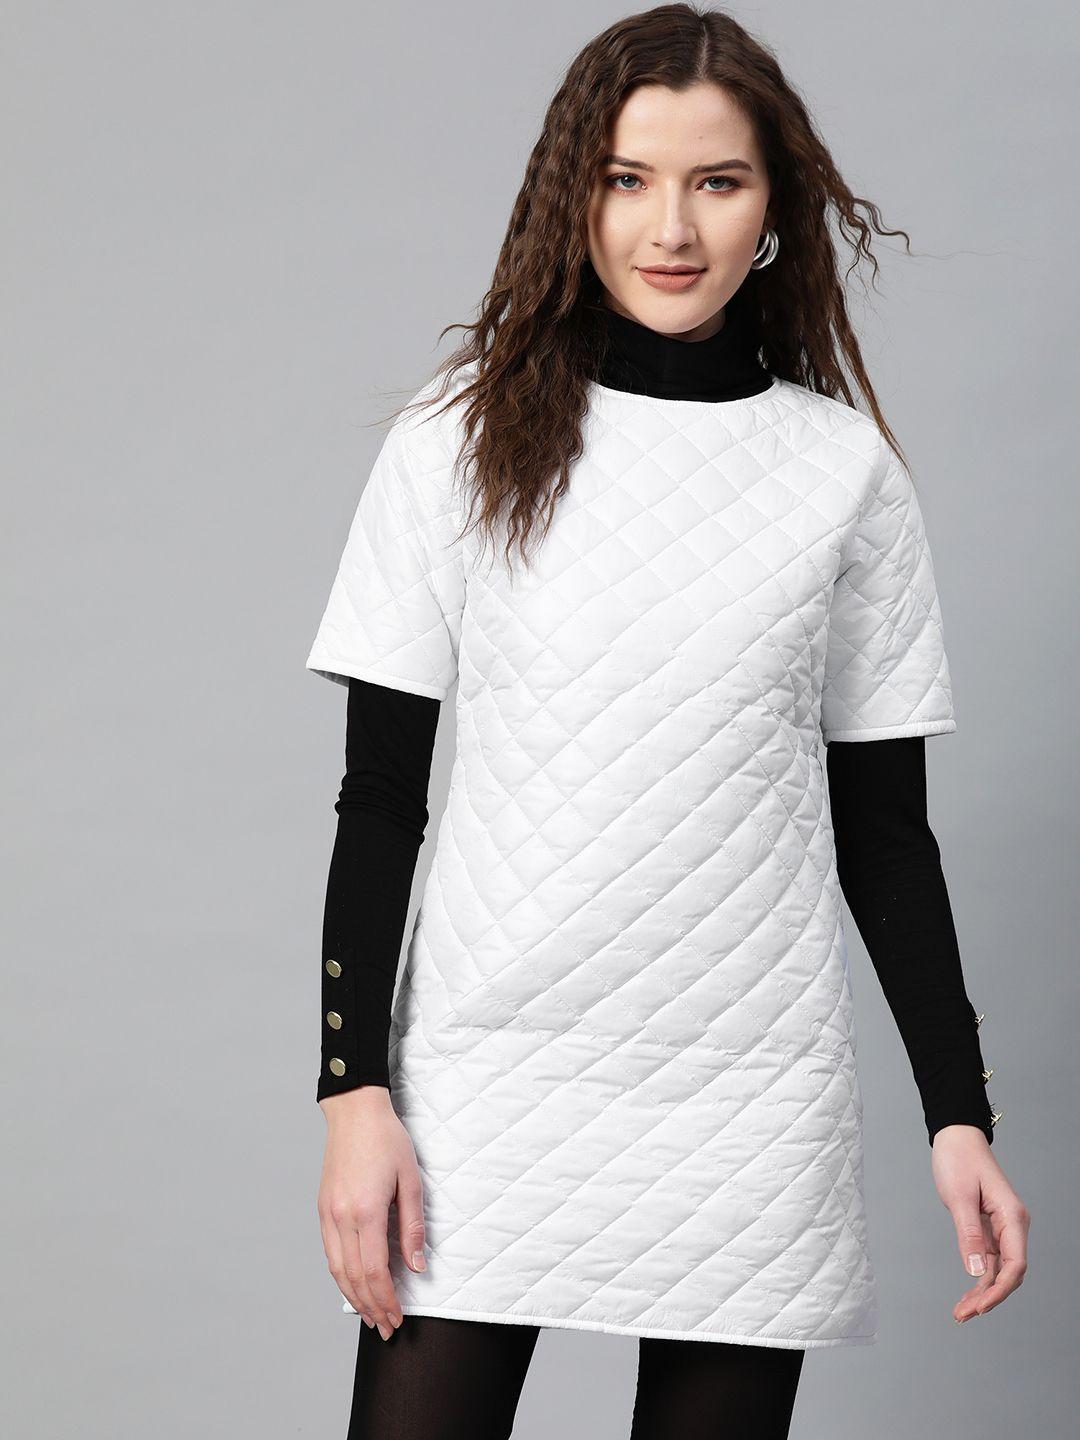 sassafras-women-white-quilted-shift-dress